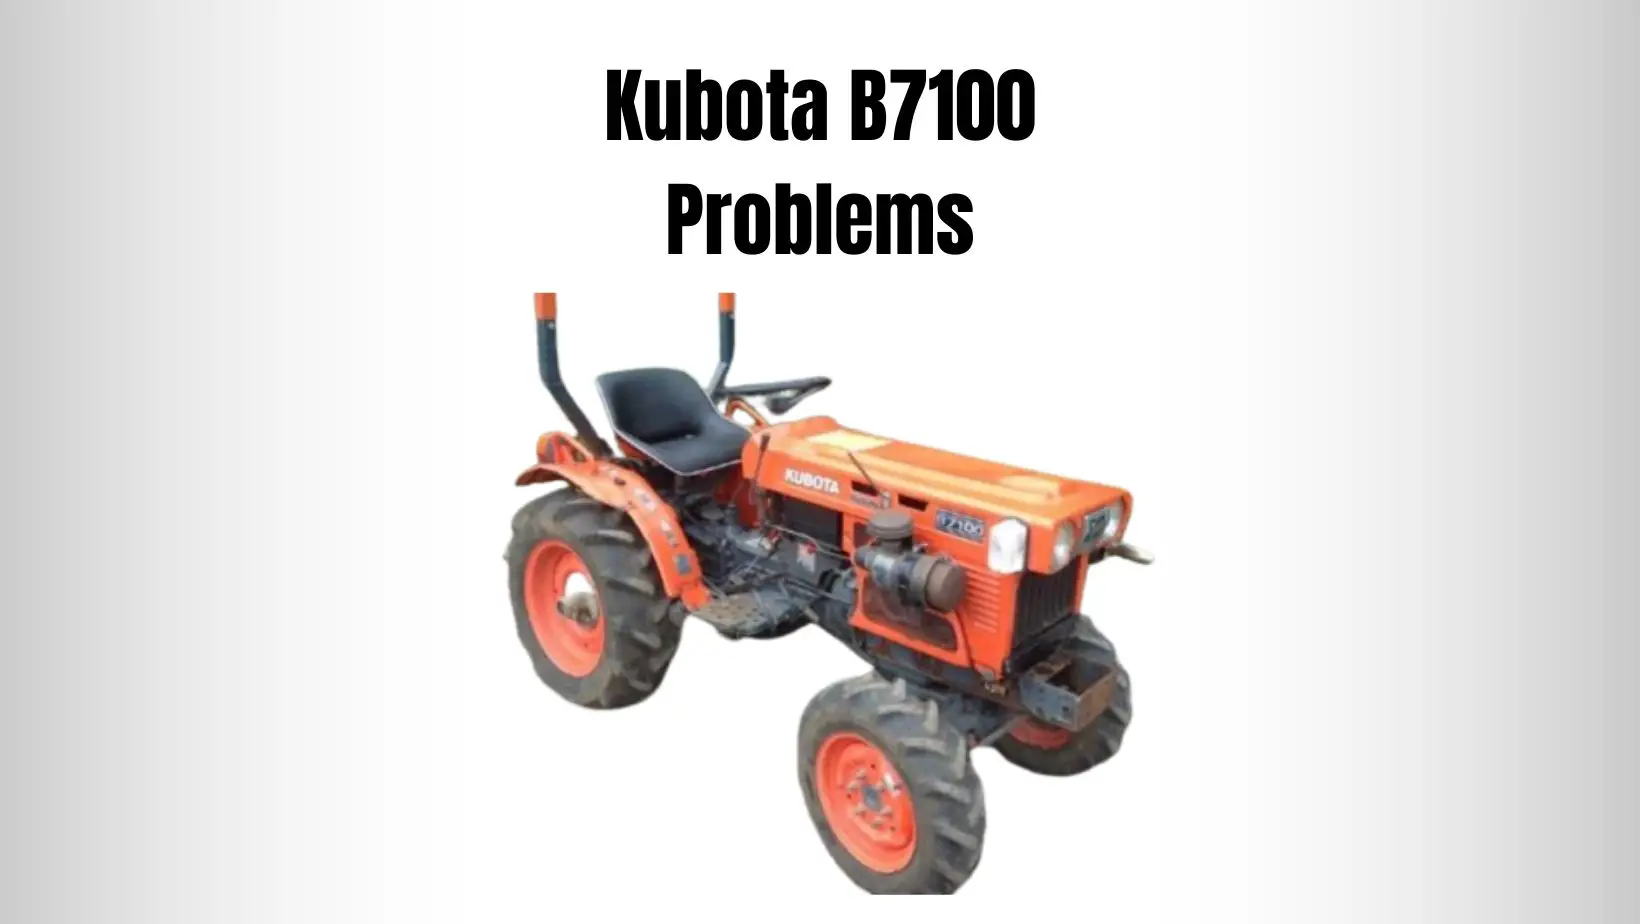 Kubota B7100 Problems